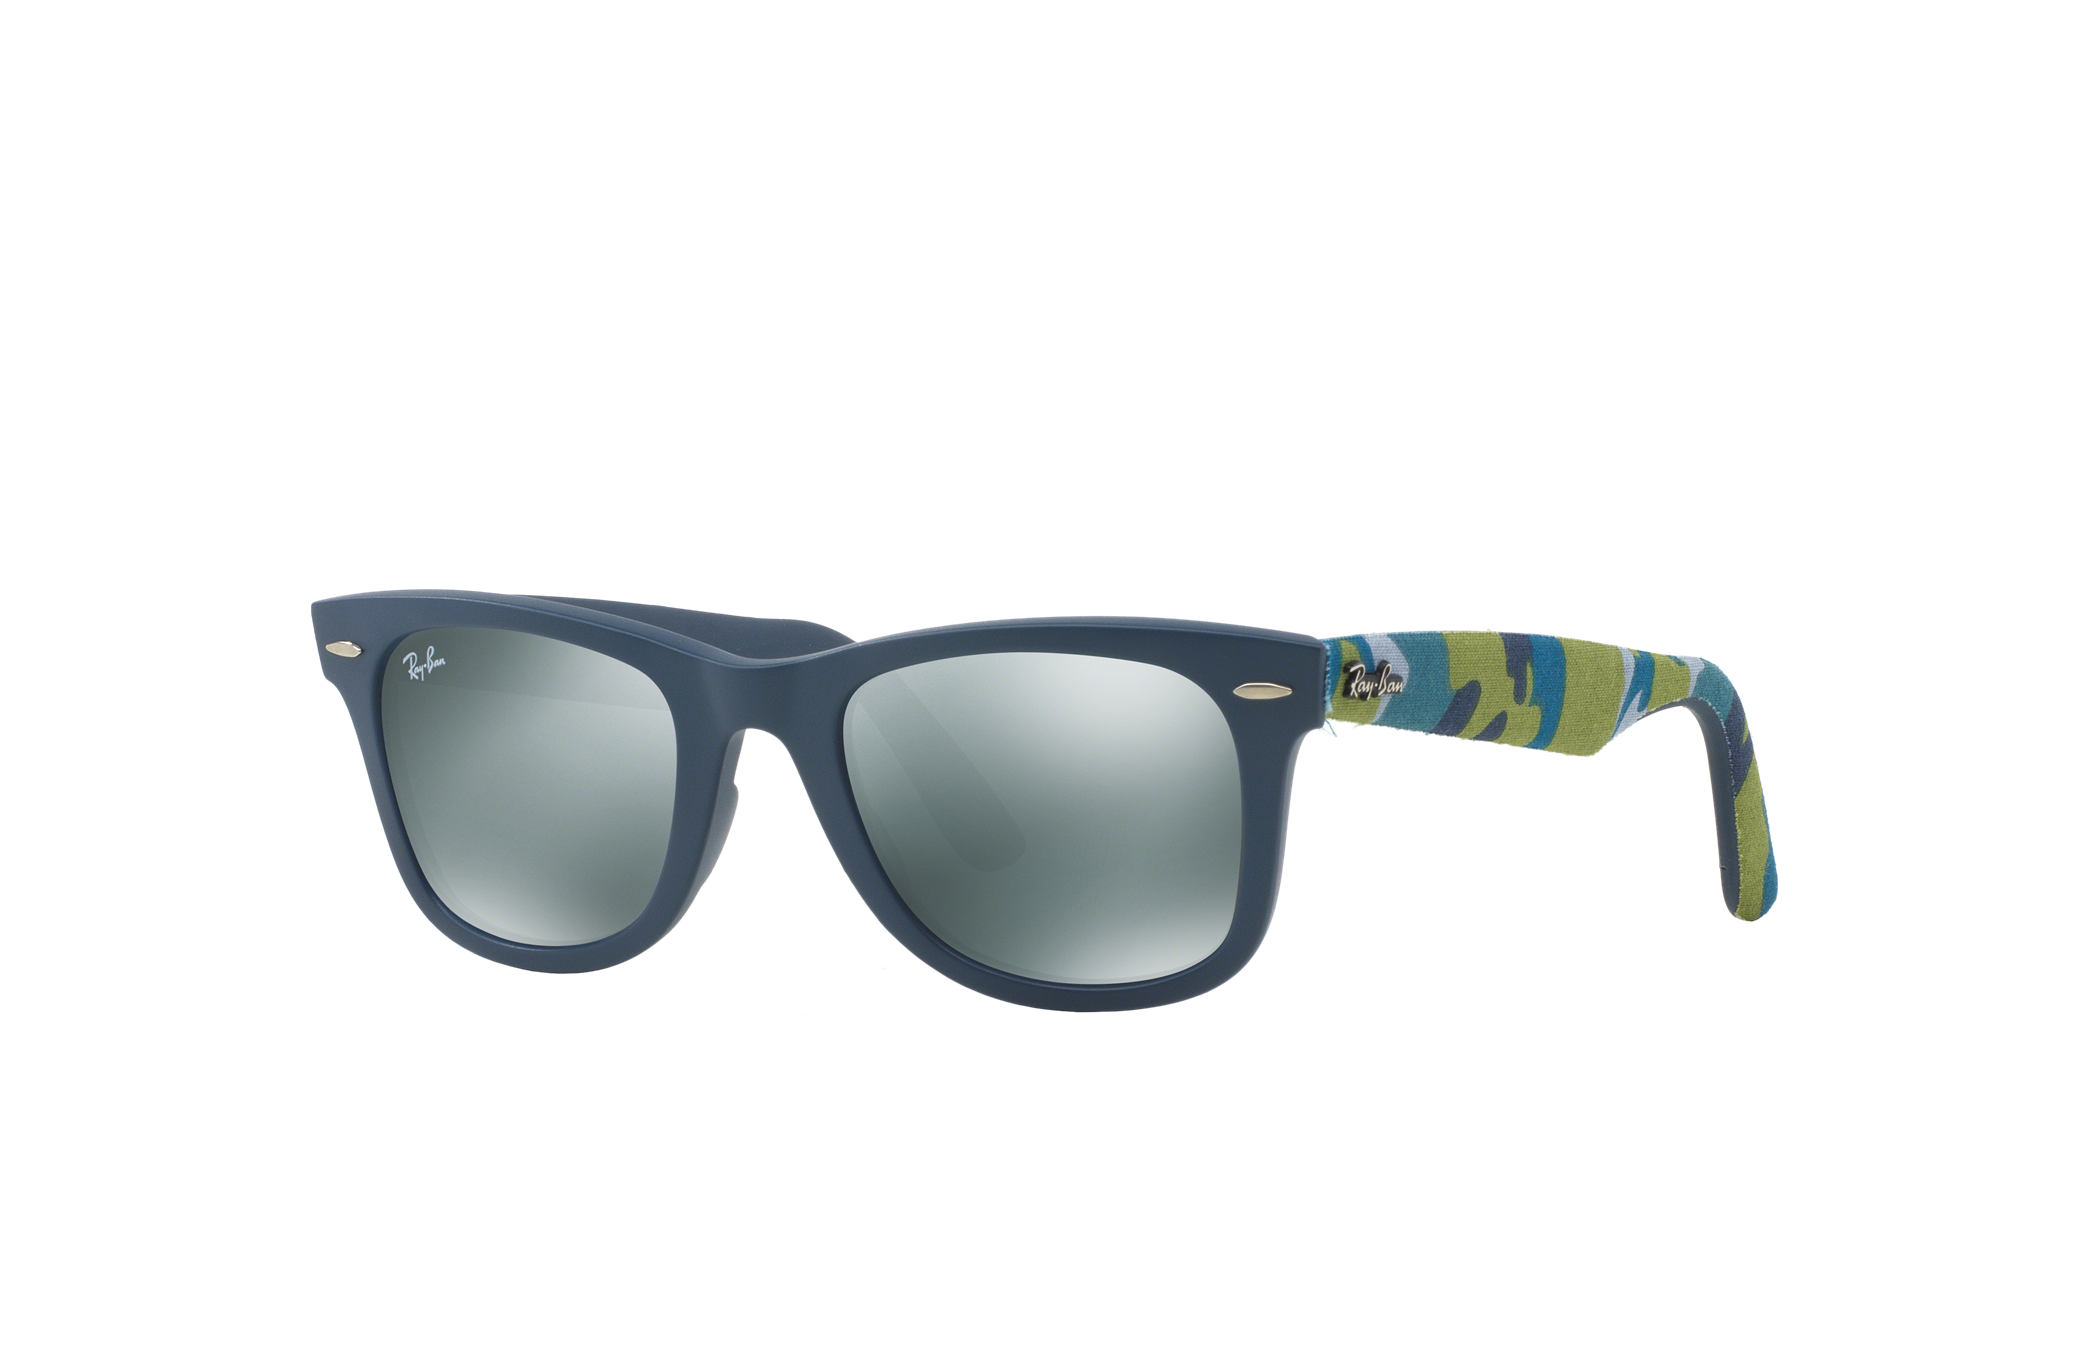 Coöperatie Garderobe stap Original Wayfarer Urban Camouflage Sunglasses in Blue and Silver | Ray-Ban®